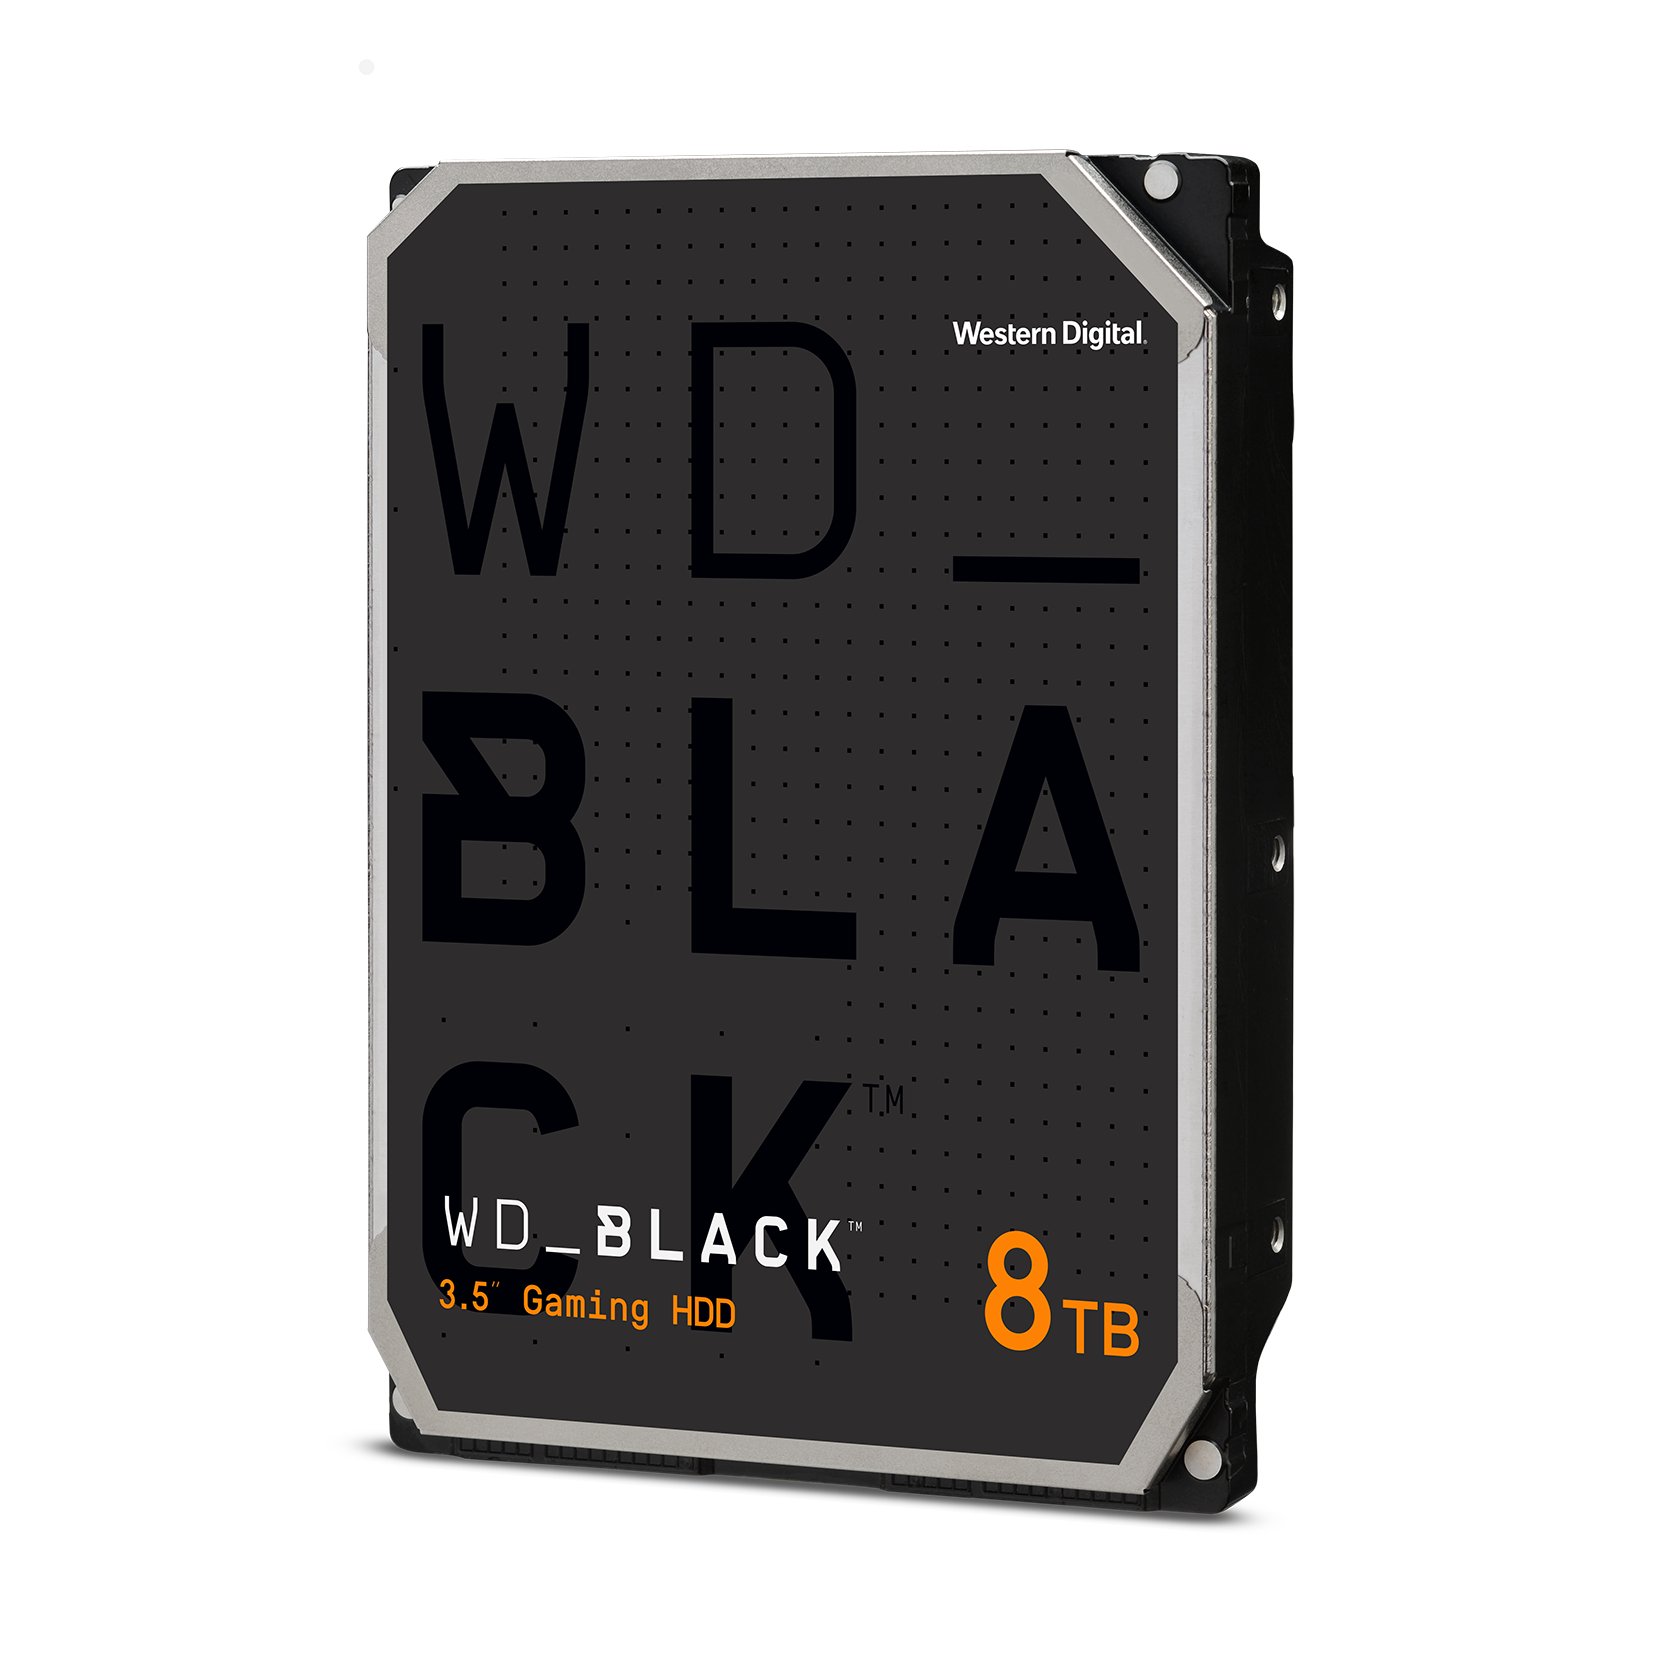 WD Black 8TB WD_Black™ Gaming - - WD8002FZWX